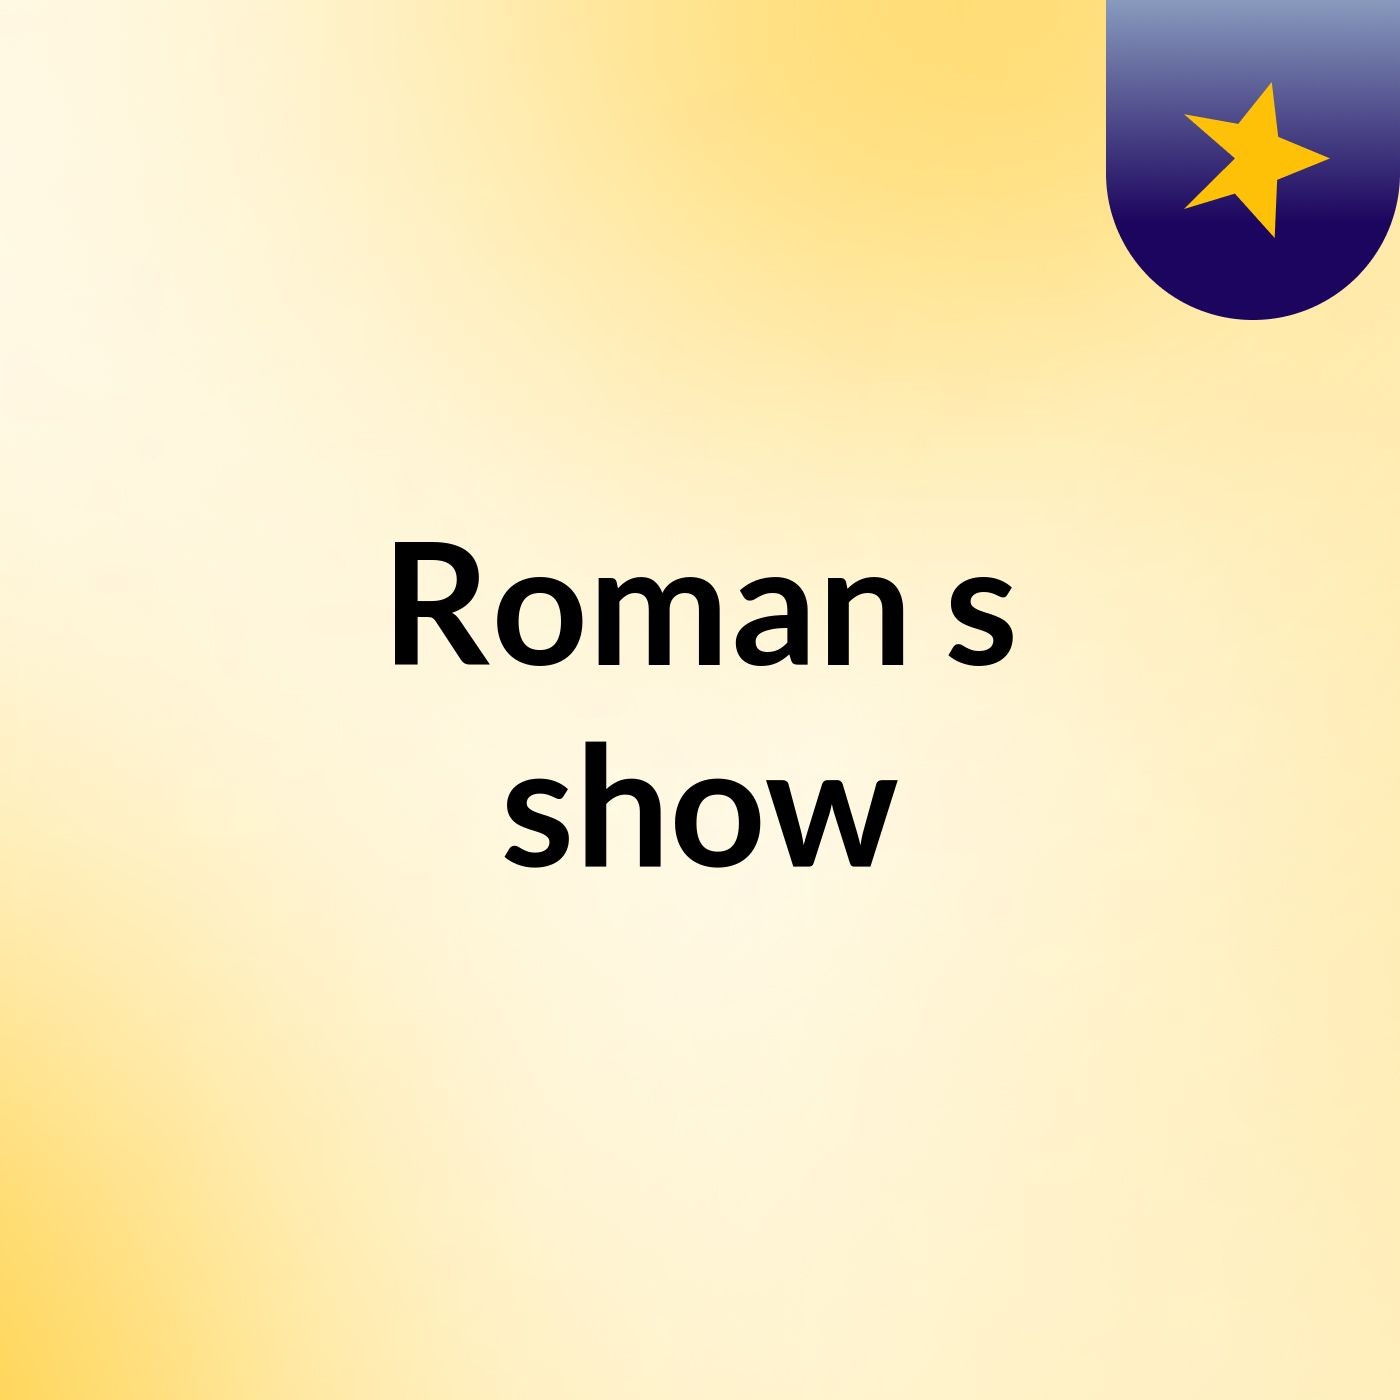 Roman's show